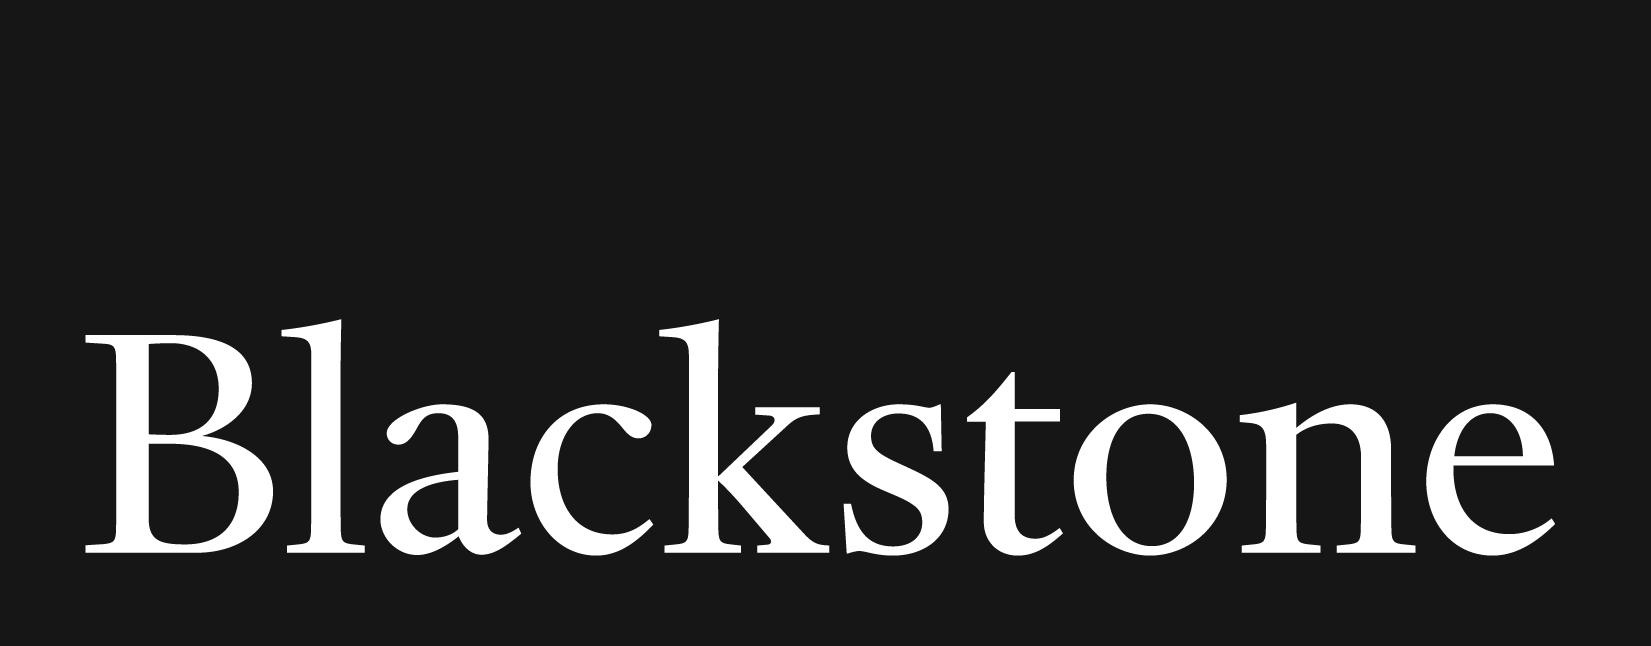 Blackstone buying majority stake in Spanx